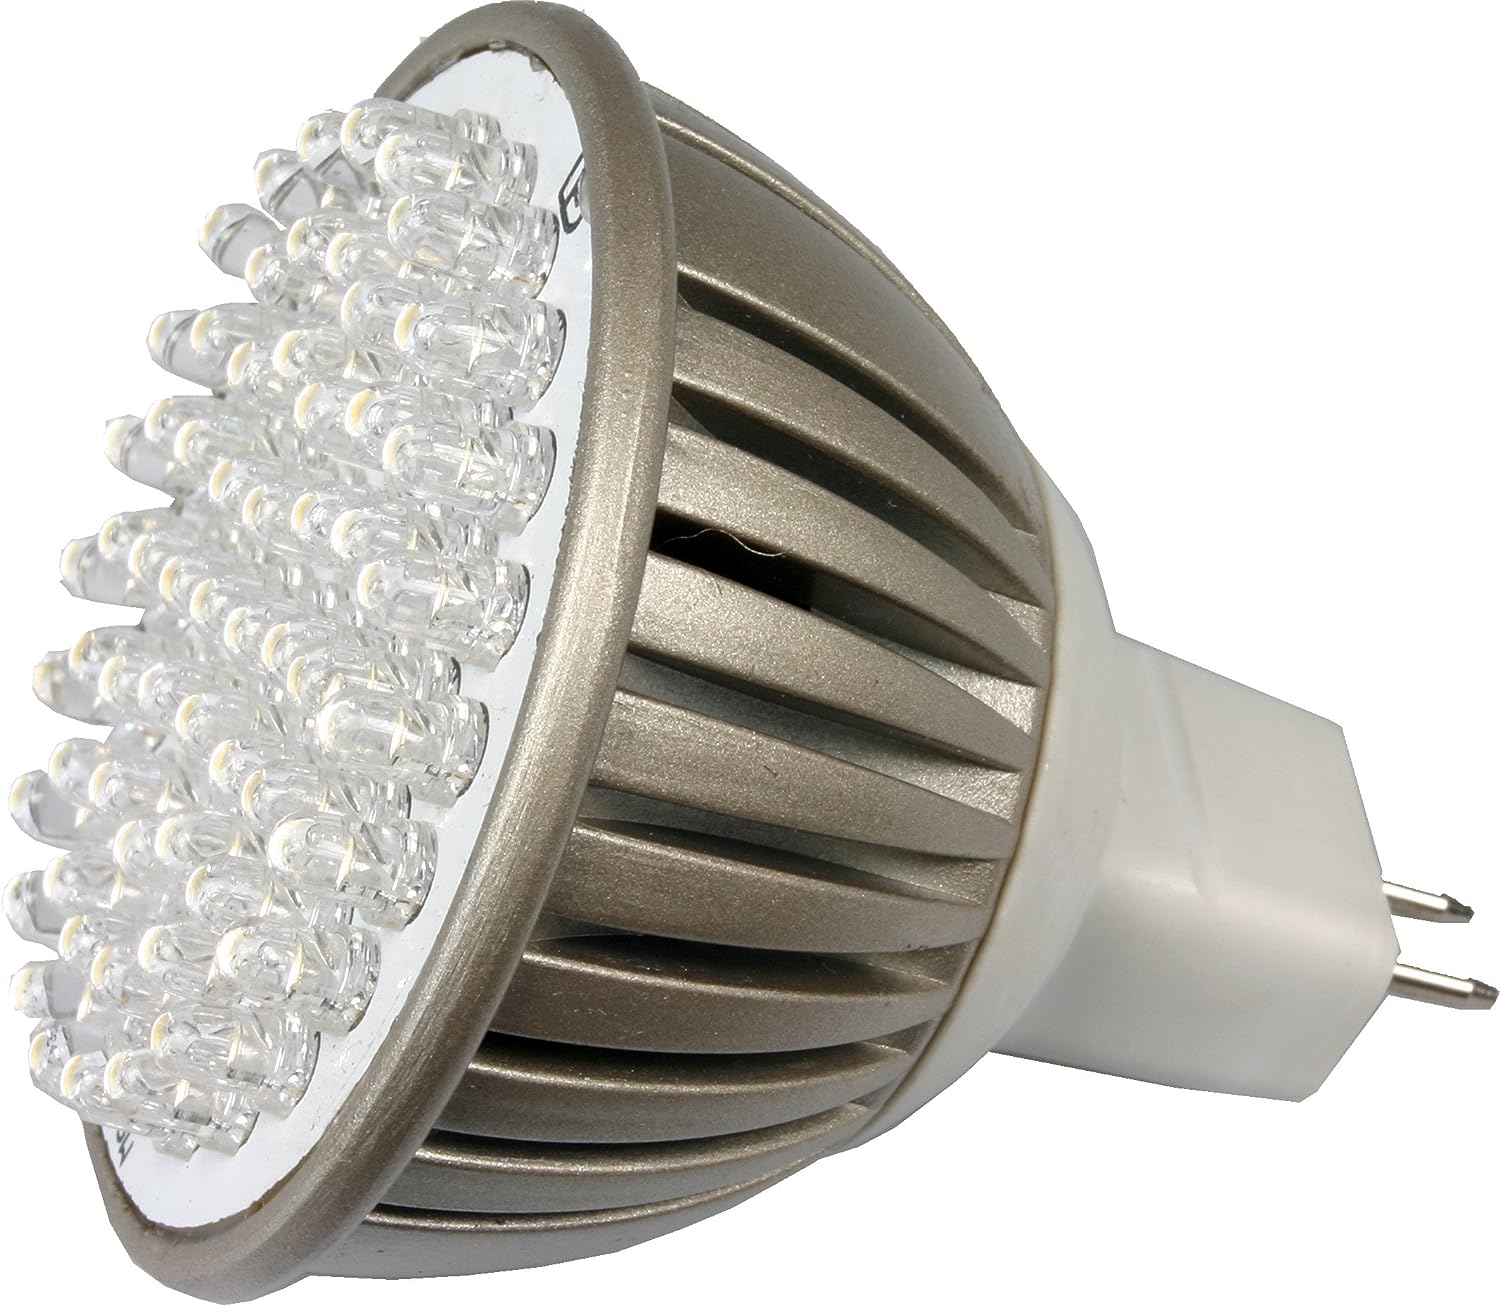 What Is A MR16 LED Bulb